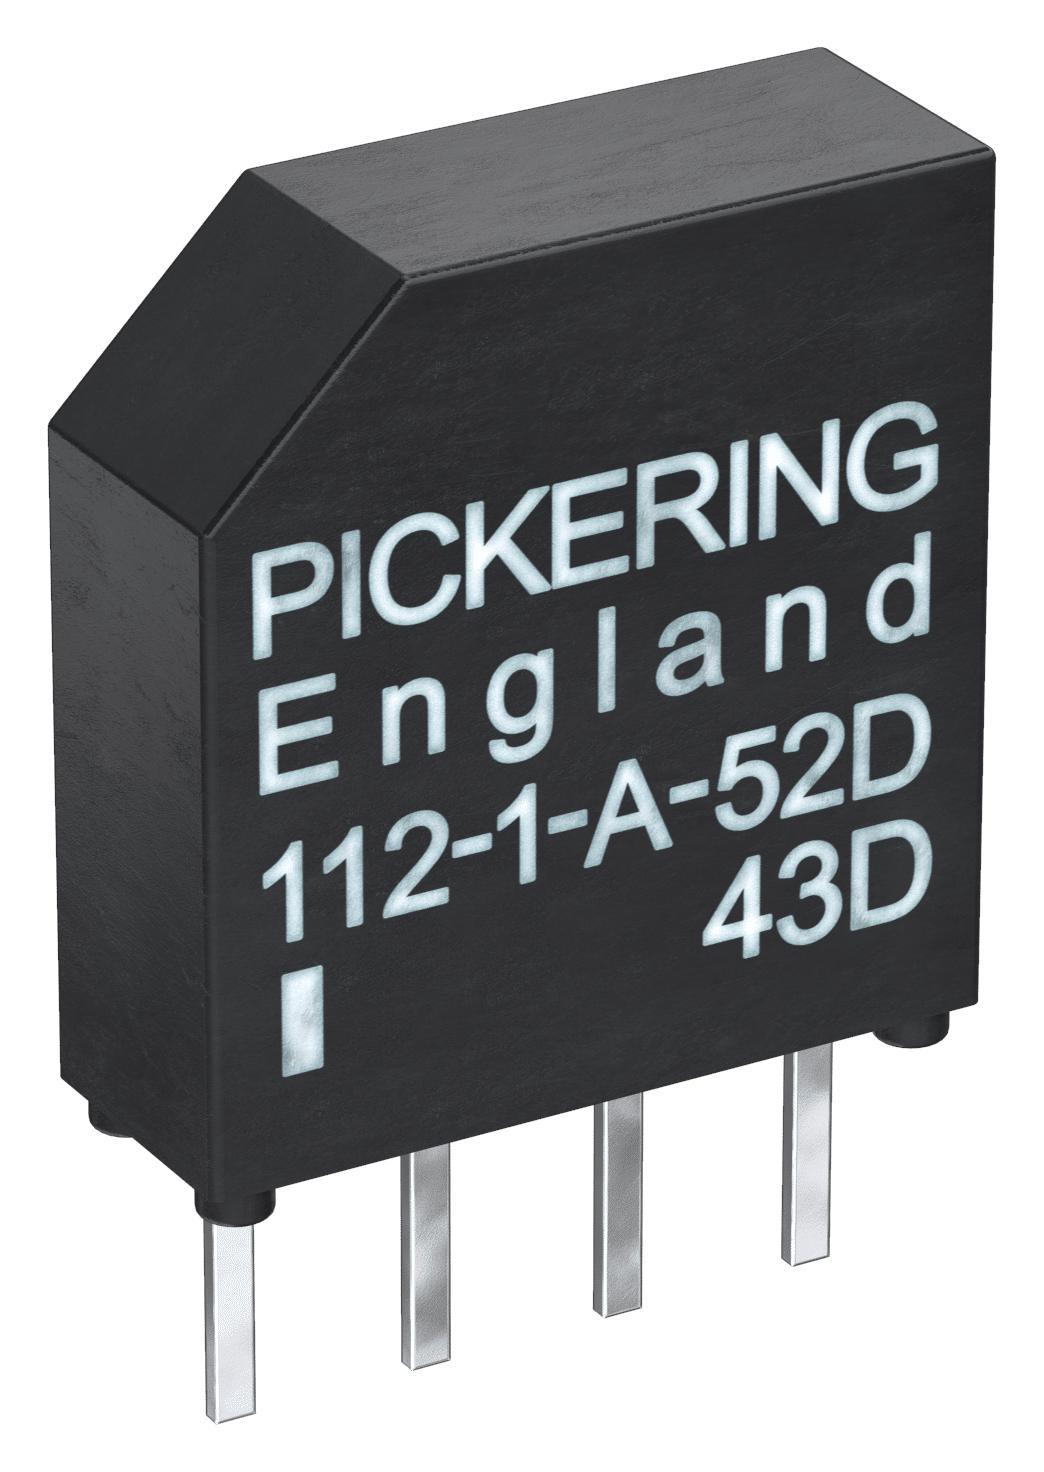 Pickering 112-1-A-12/2D Reed Relay, Spst-No, 12V, Tht